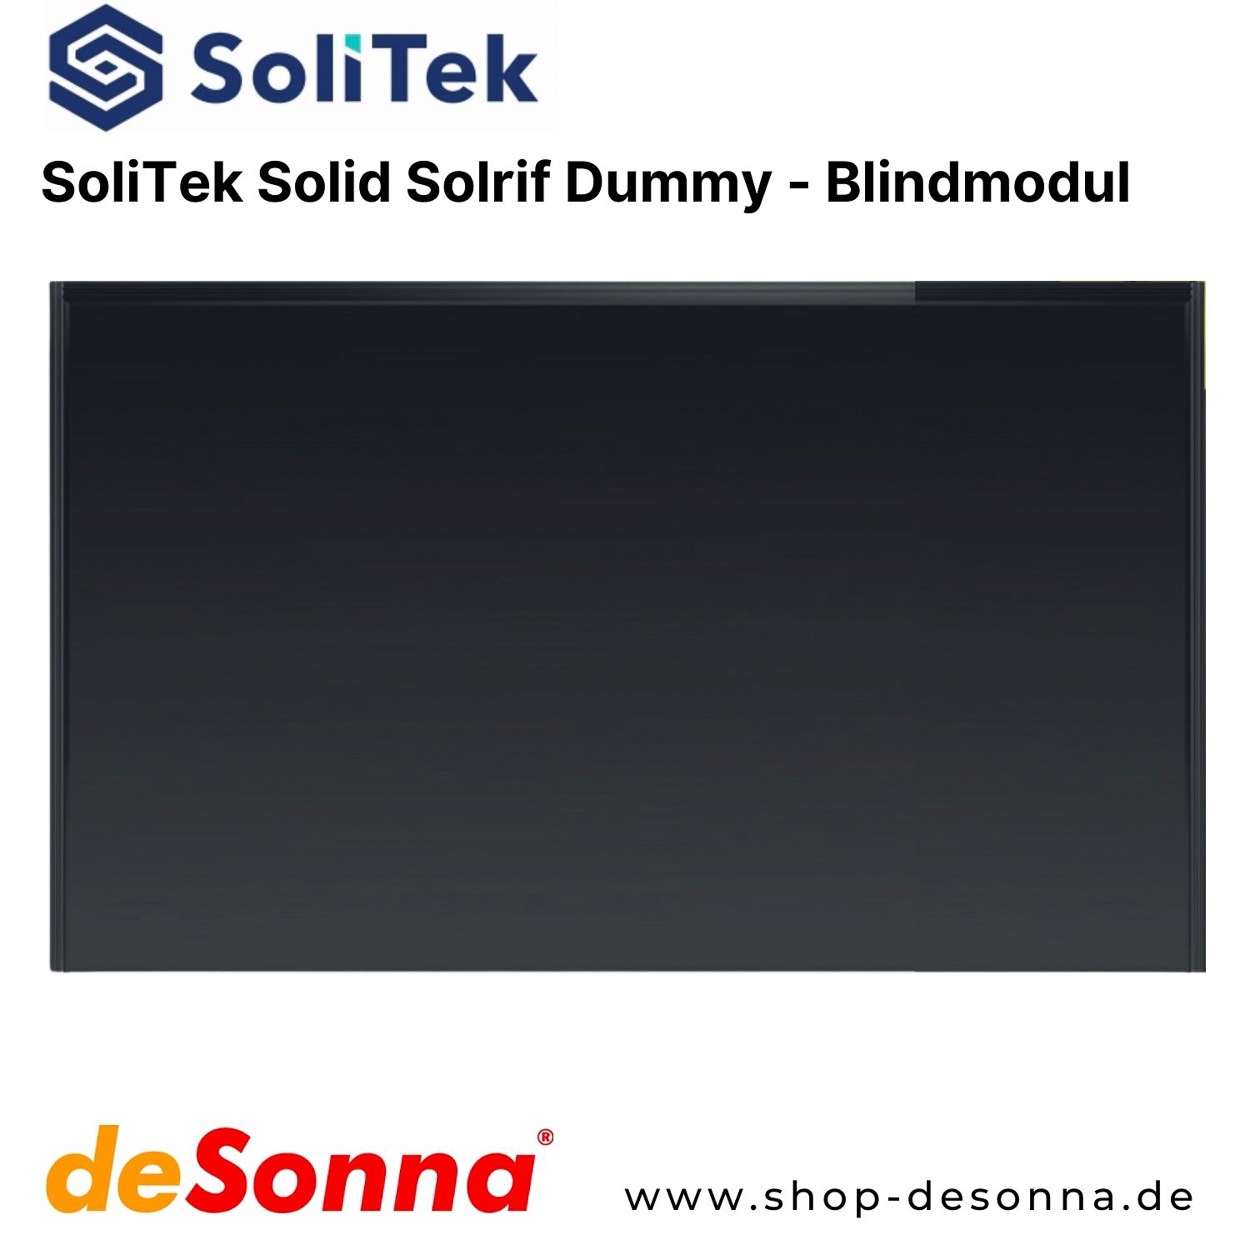 SoliTek Solid Solrif Dummy - Blindmodul